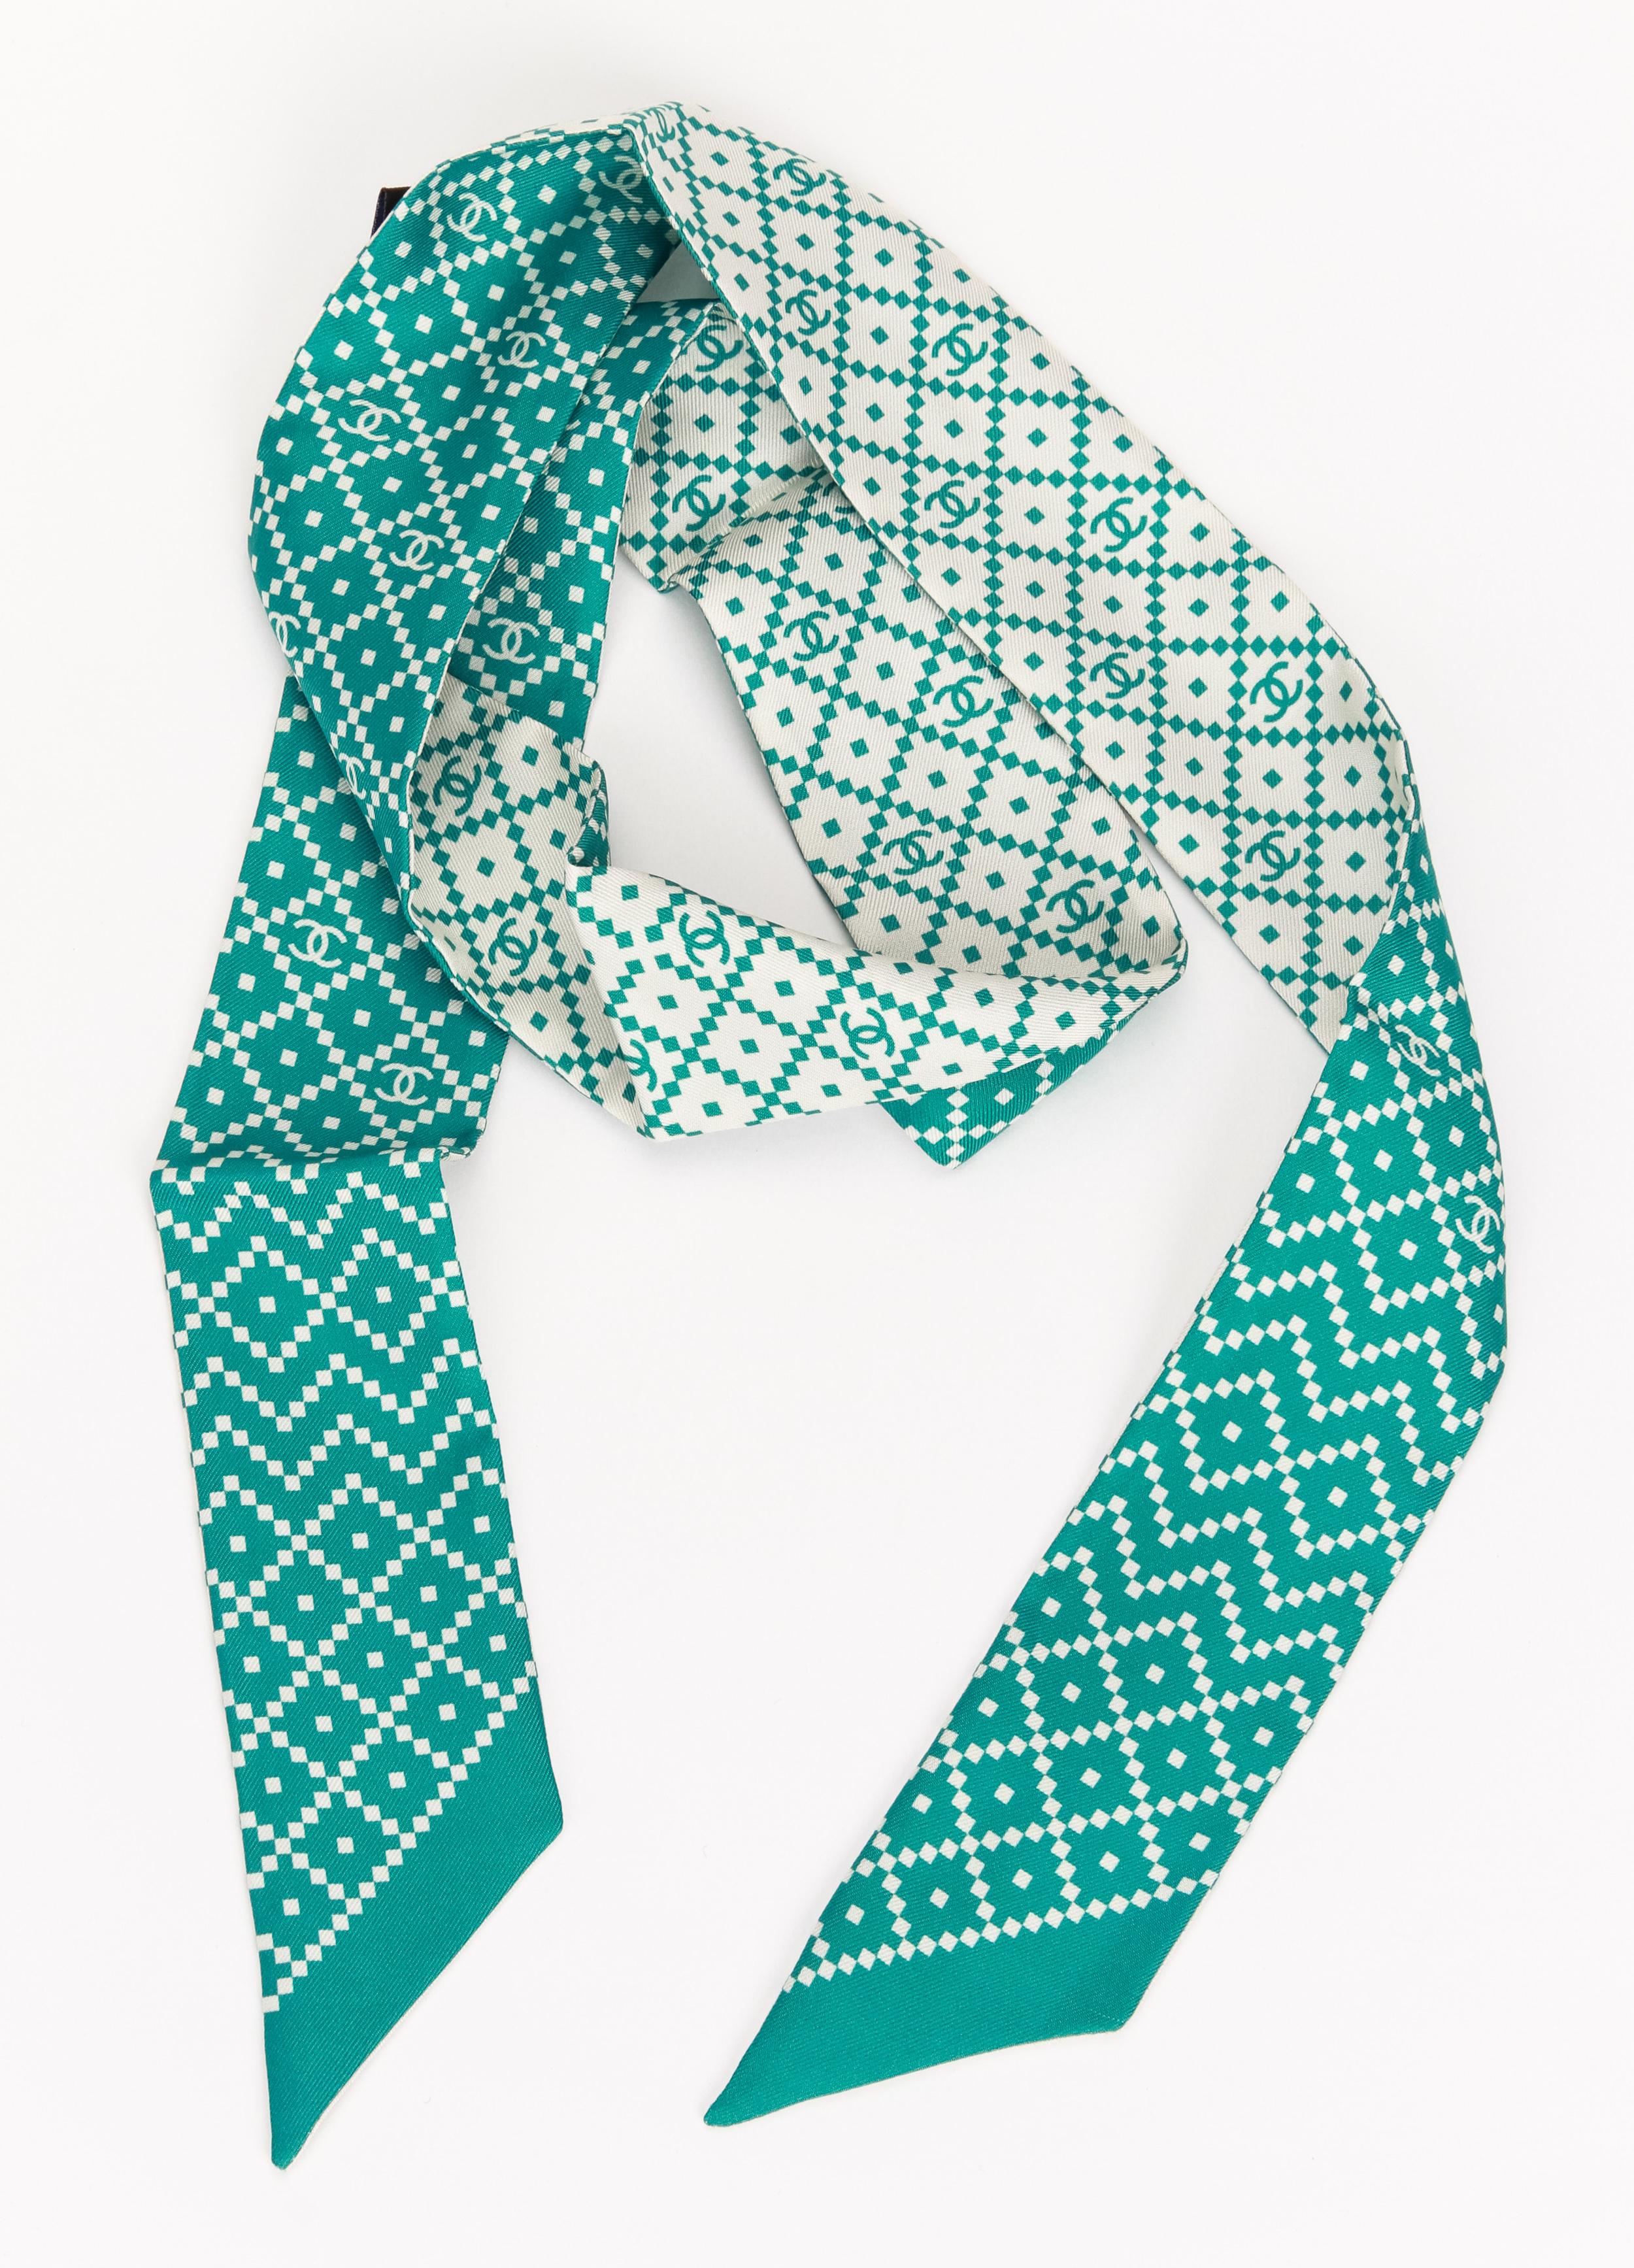 Chanel new green and white logo twilly (headband/scarf)
100%silk
48